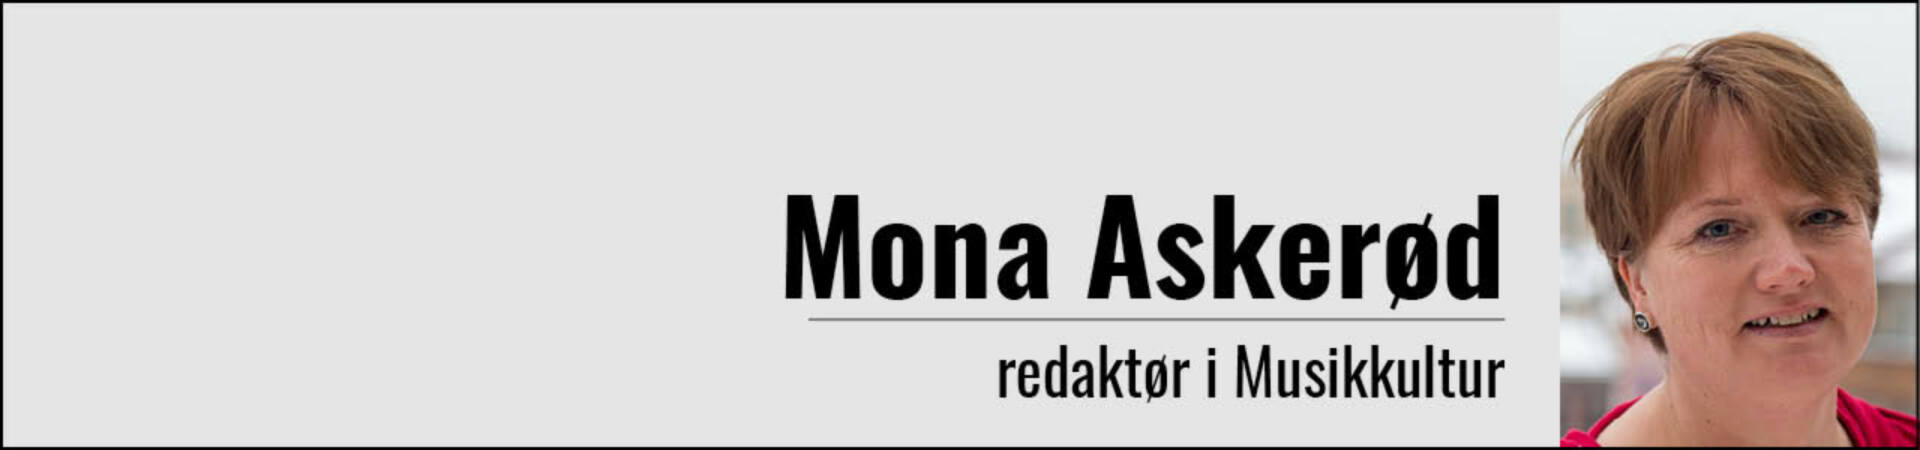 Musikkulturs redaktør Mona Askerød.